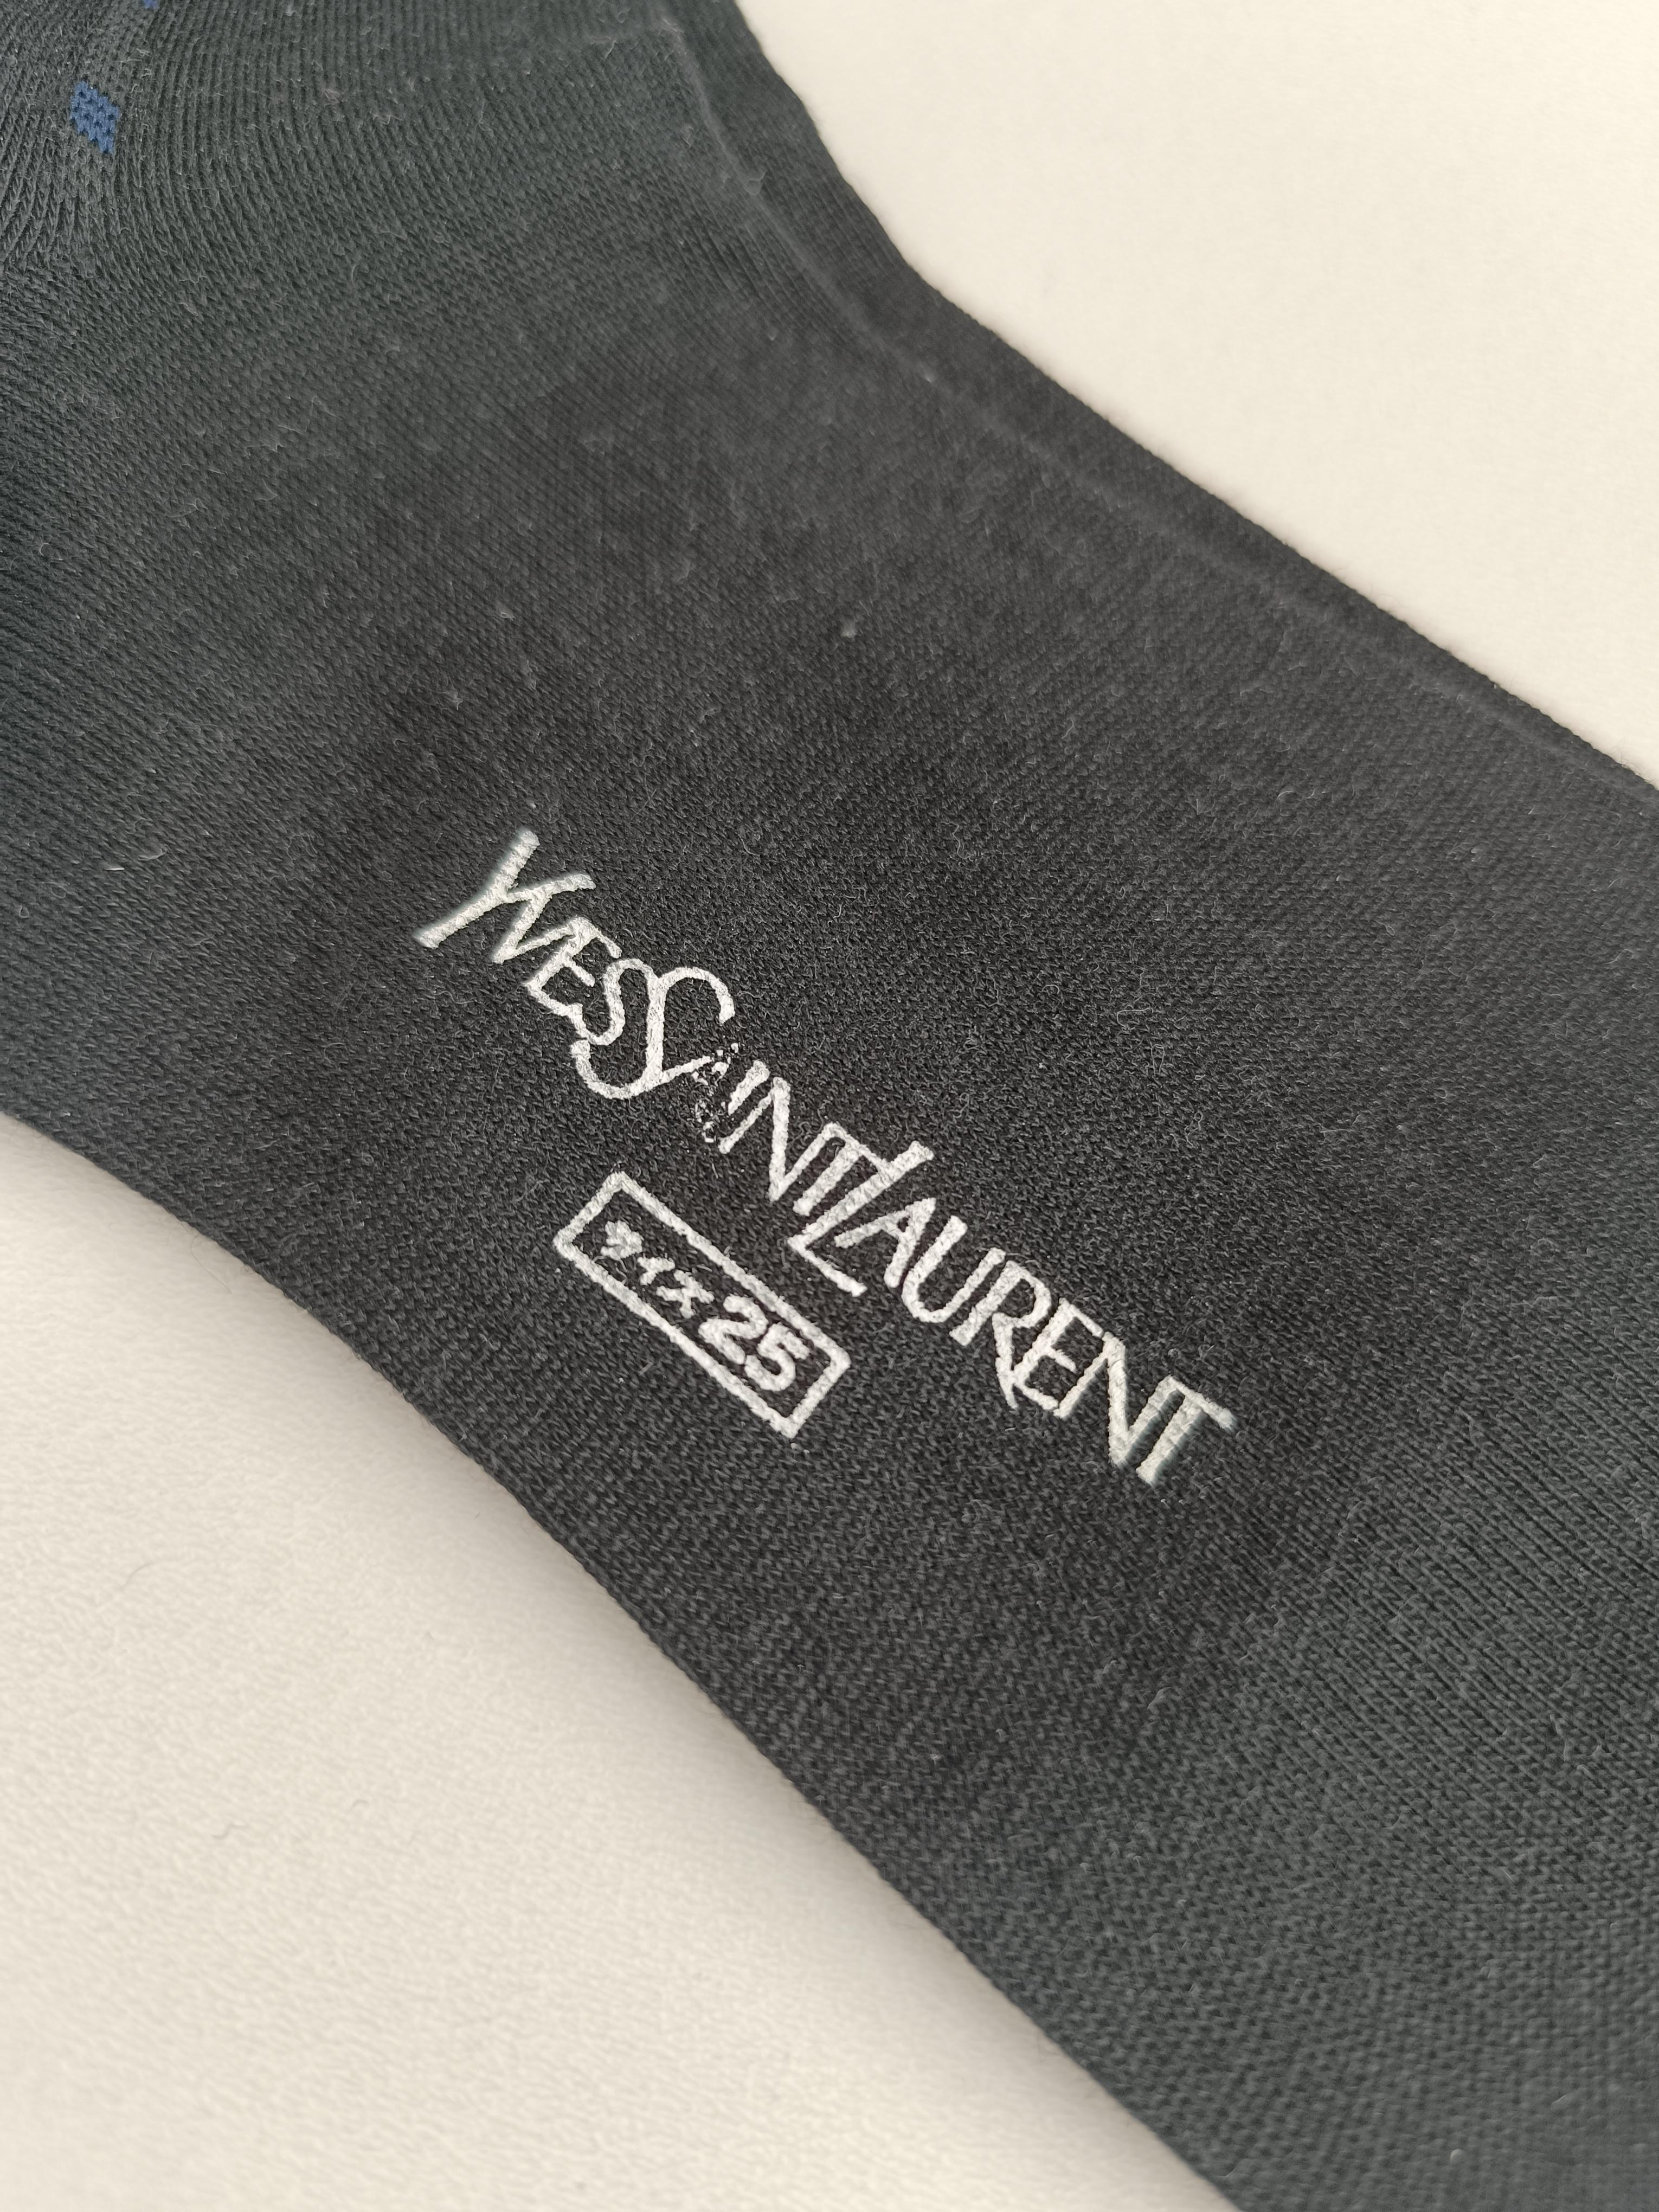 Authentische Yves Saint Laurent Vintage Herren Socken im Angebot 3